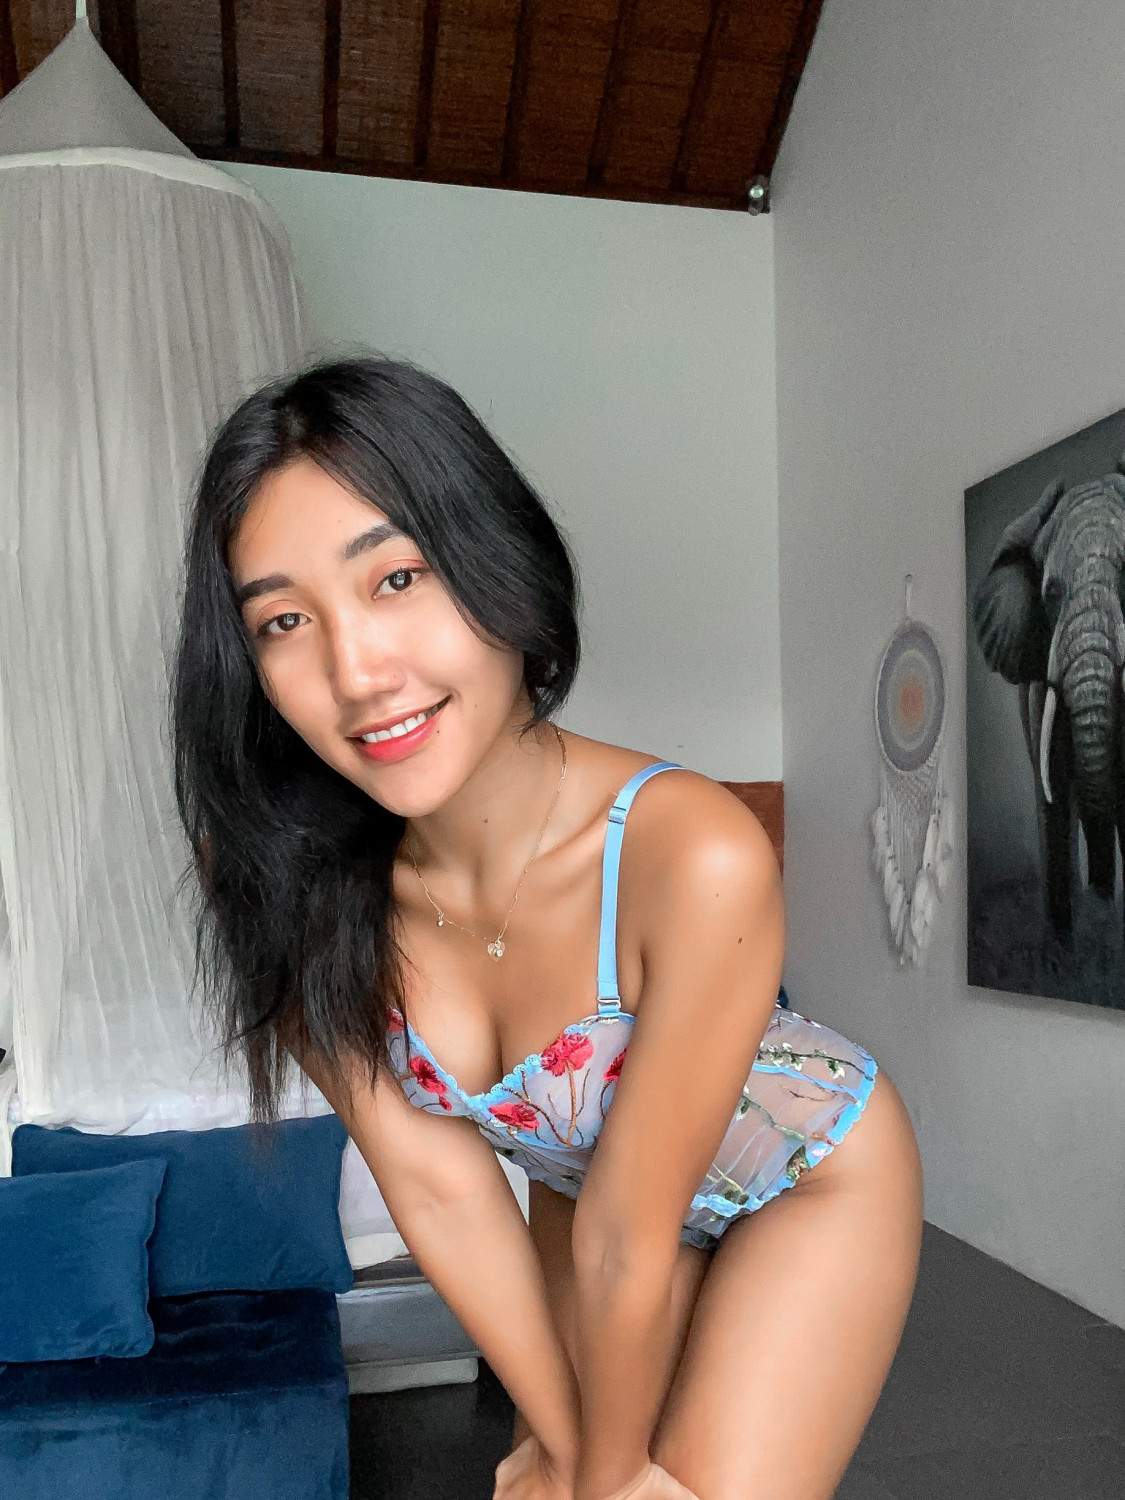 Natural Asian - natural asian in lingerie - Porn Videos & Photos - EroMe